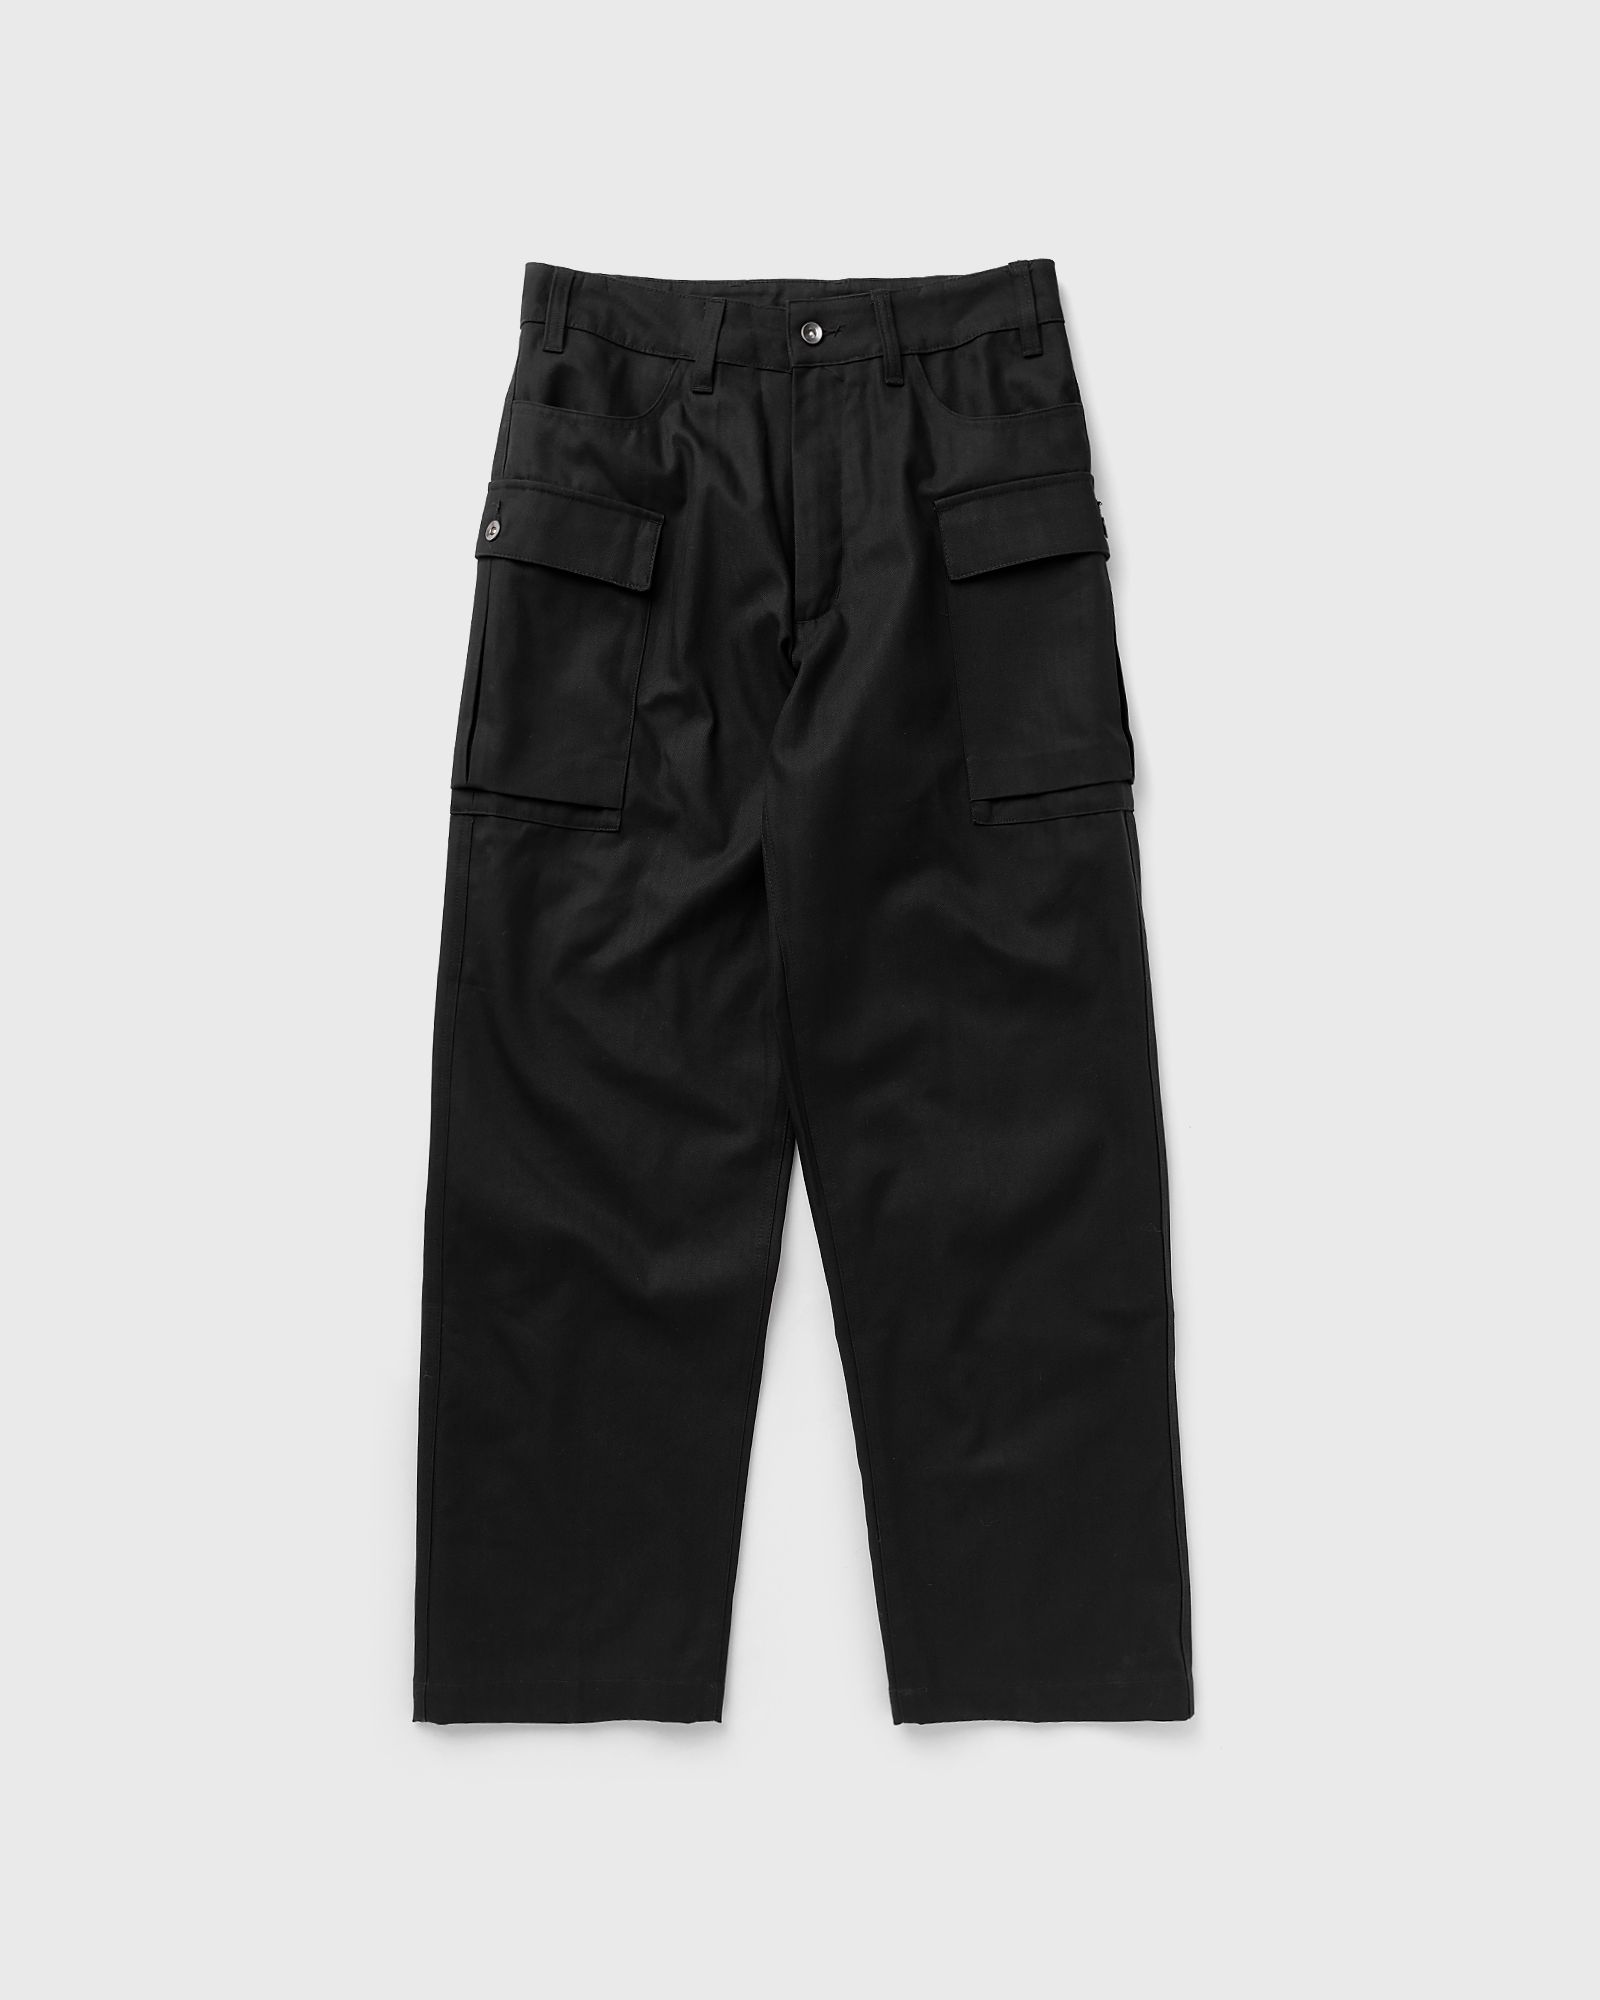 Nike - life cargo pant men cargo pants black in größe:xxl